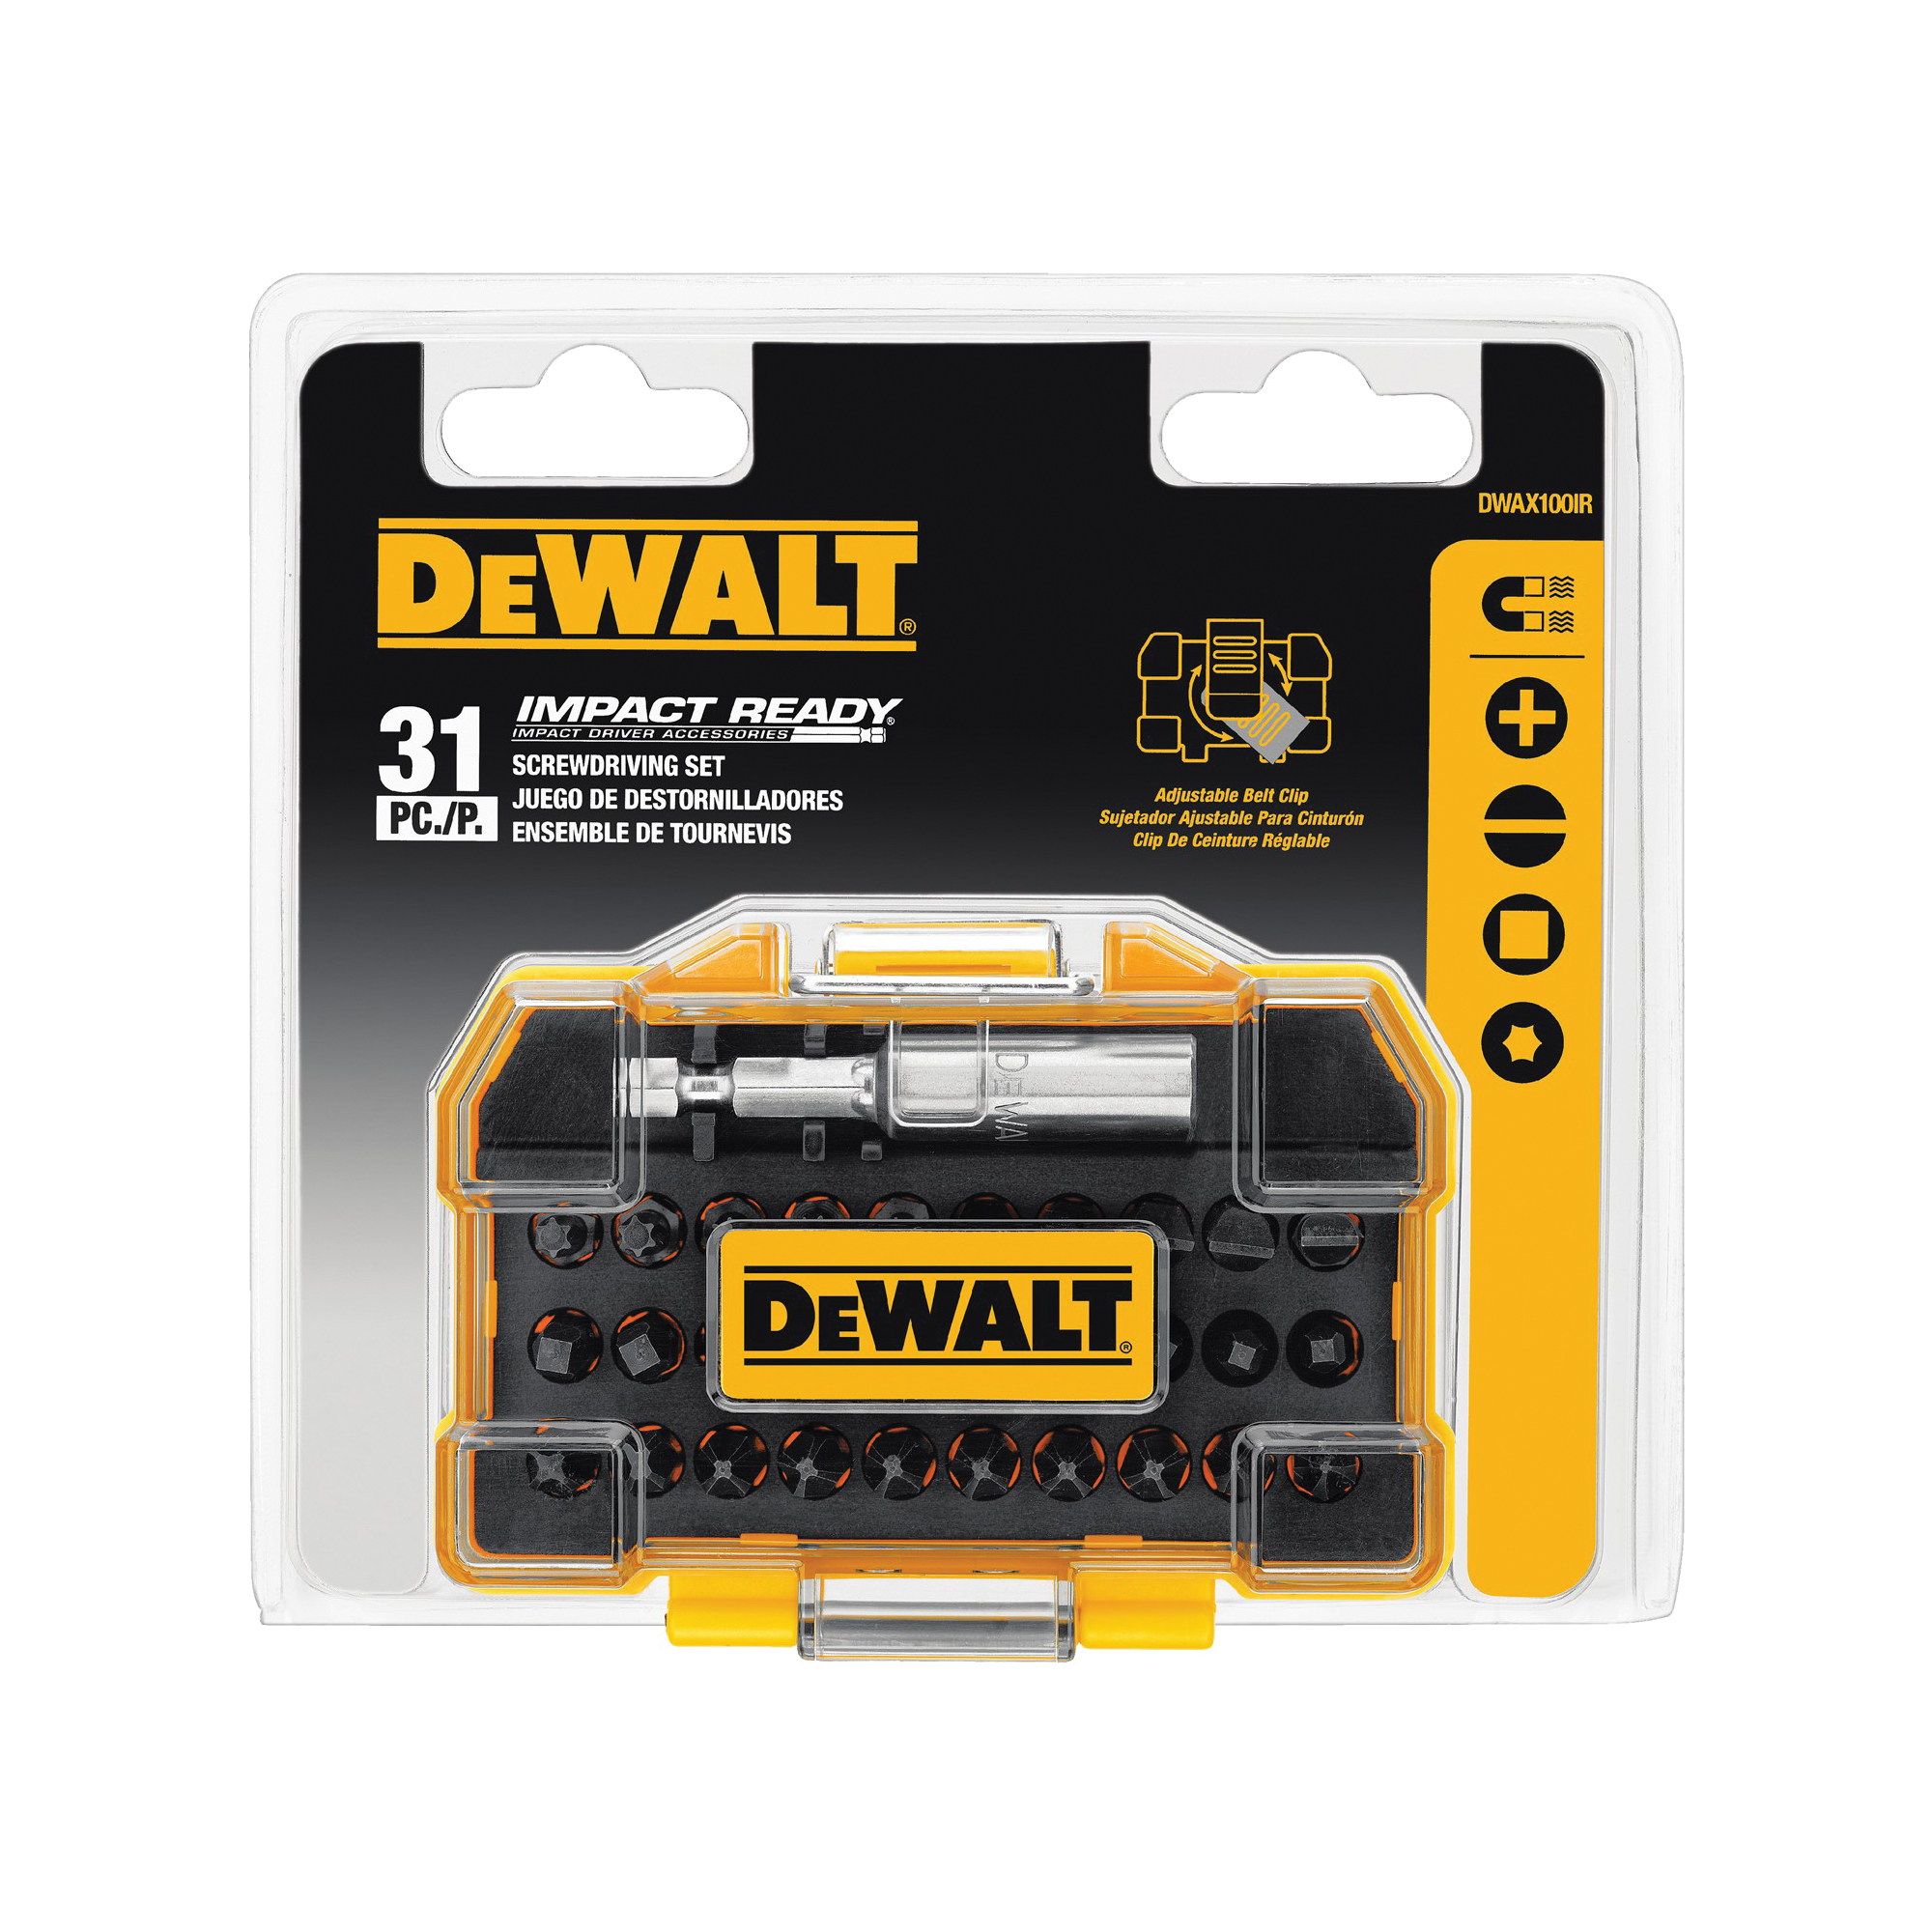 DeWALT DWAX100IR Screwdriver Bit Set, Steel - 1